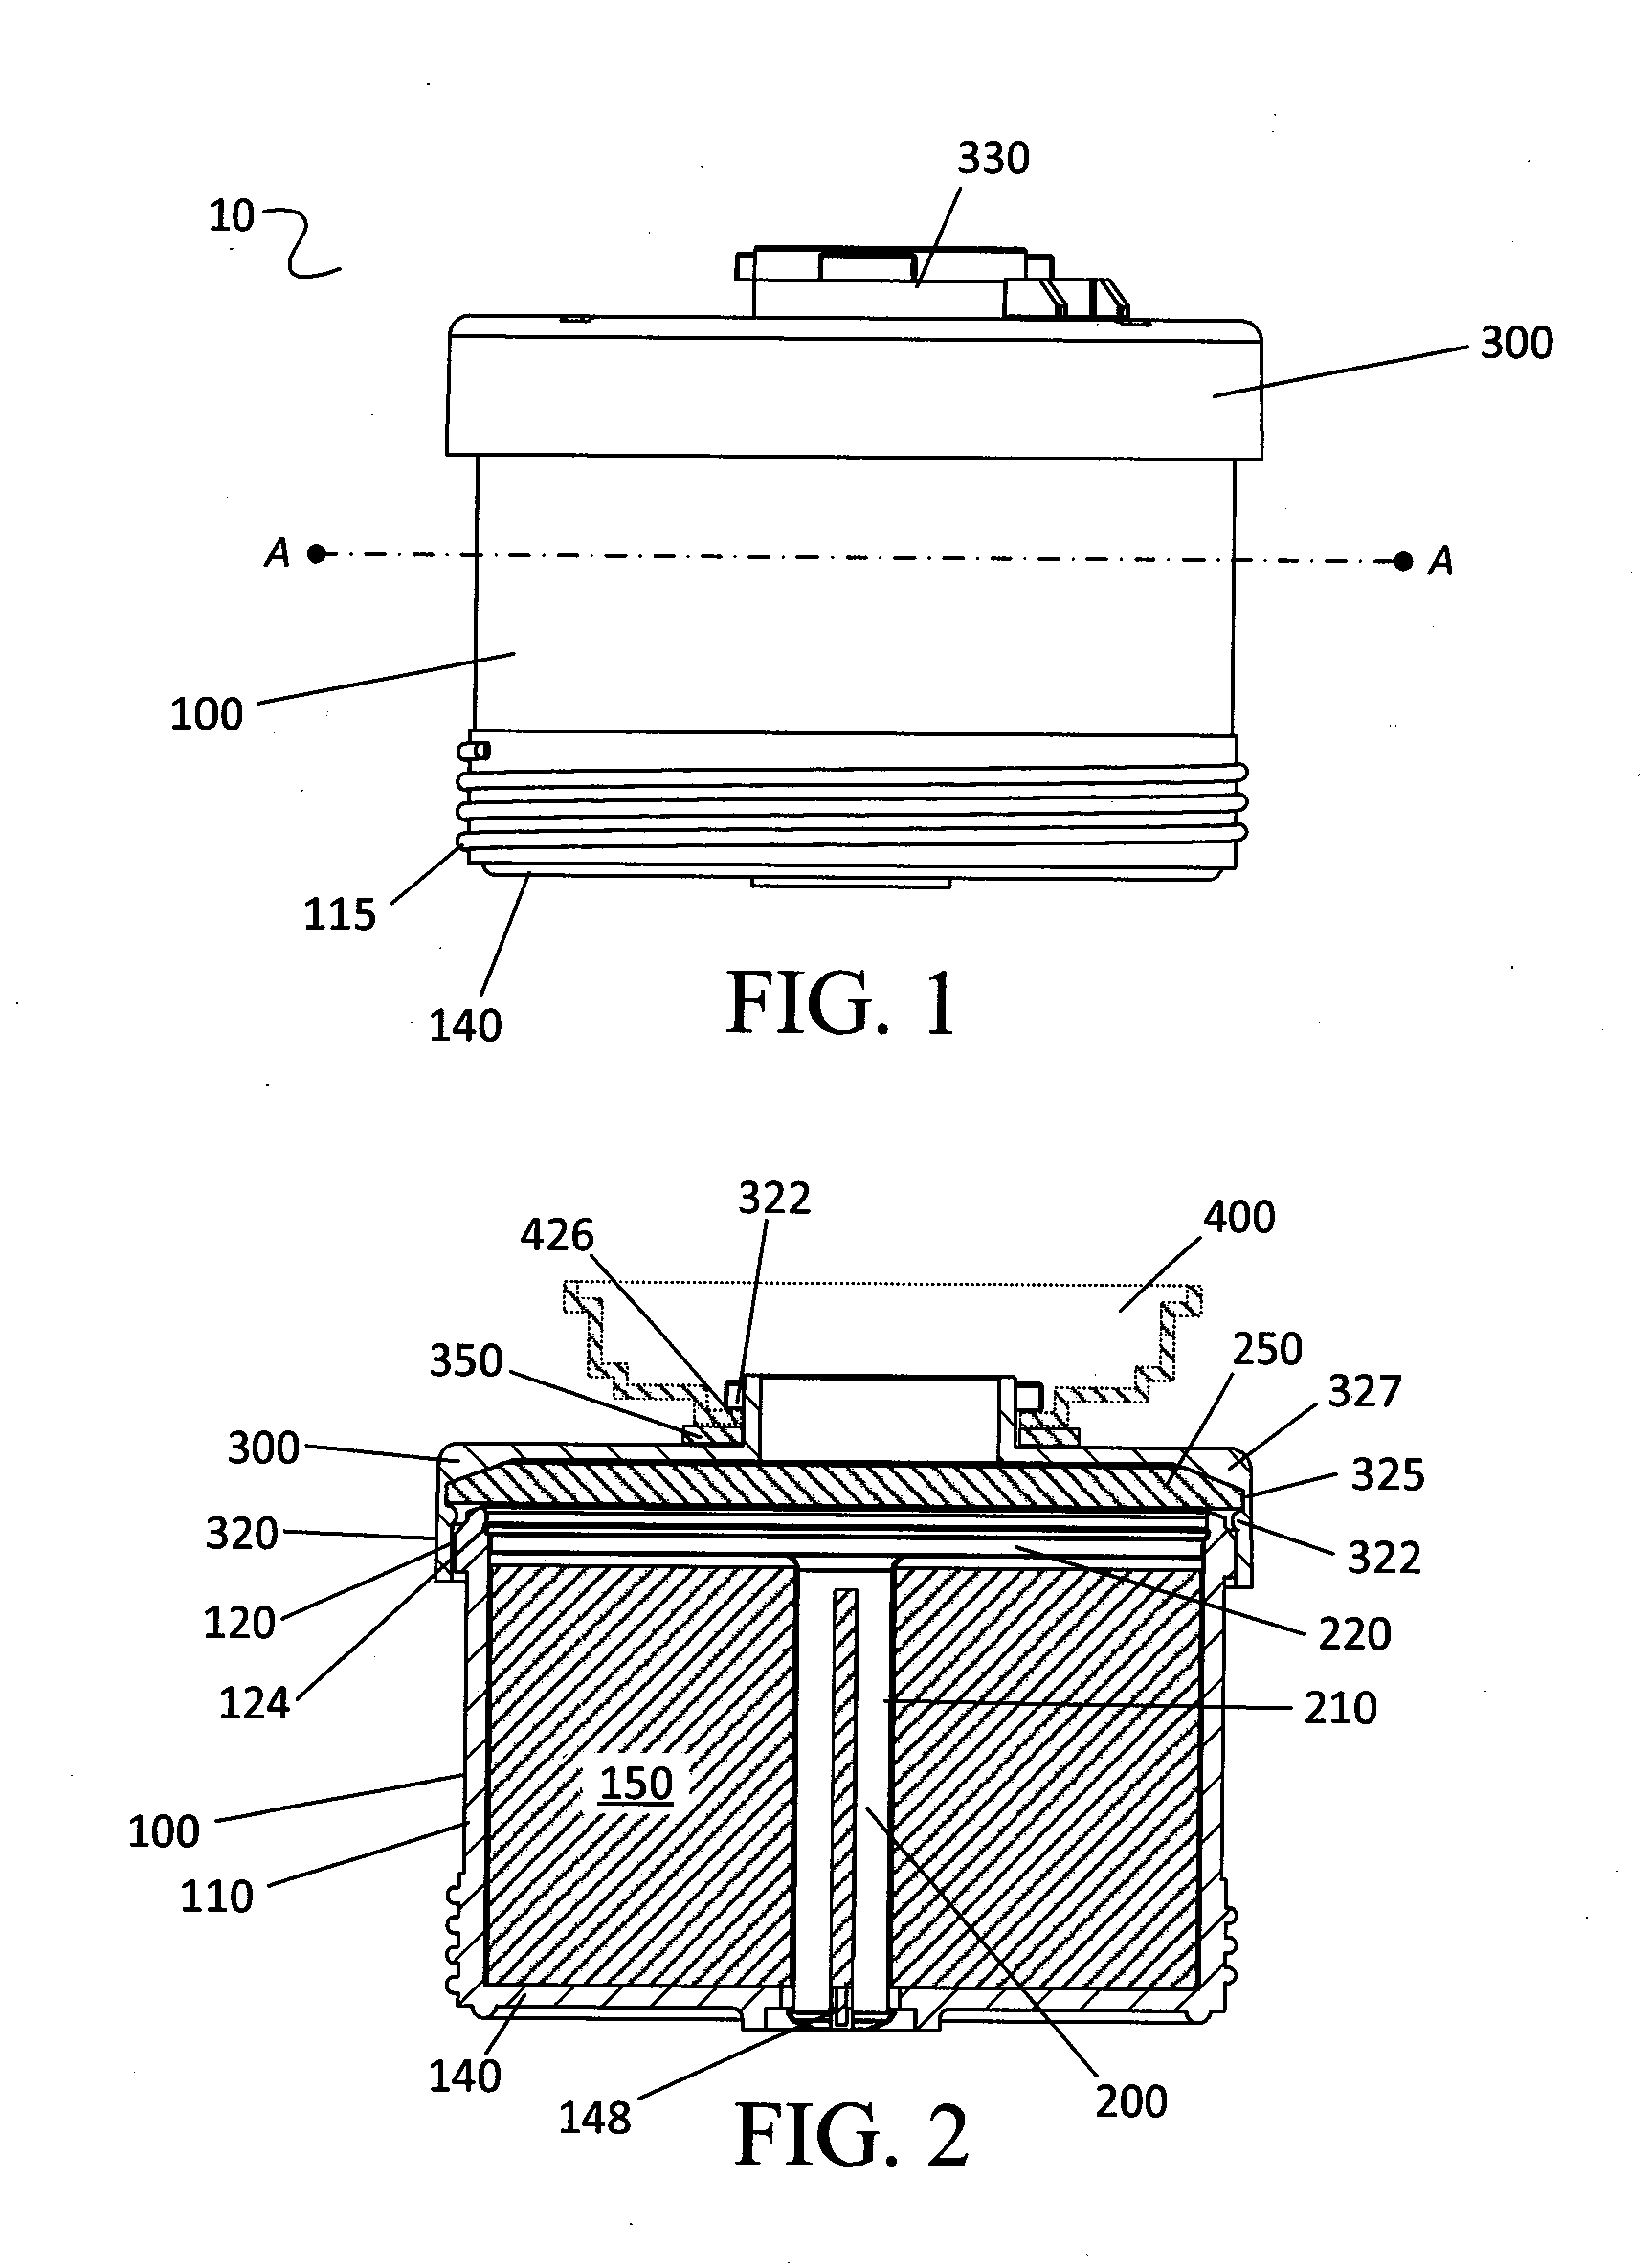 Filter cartridge apparatus